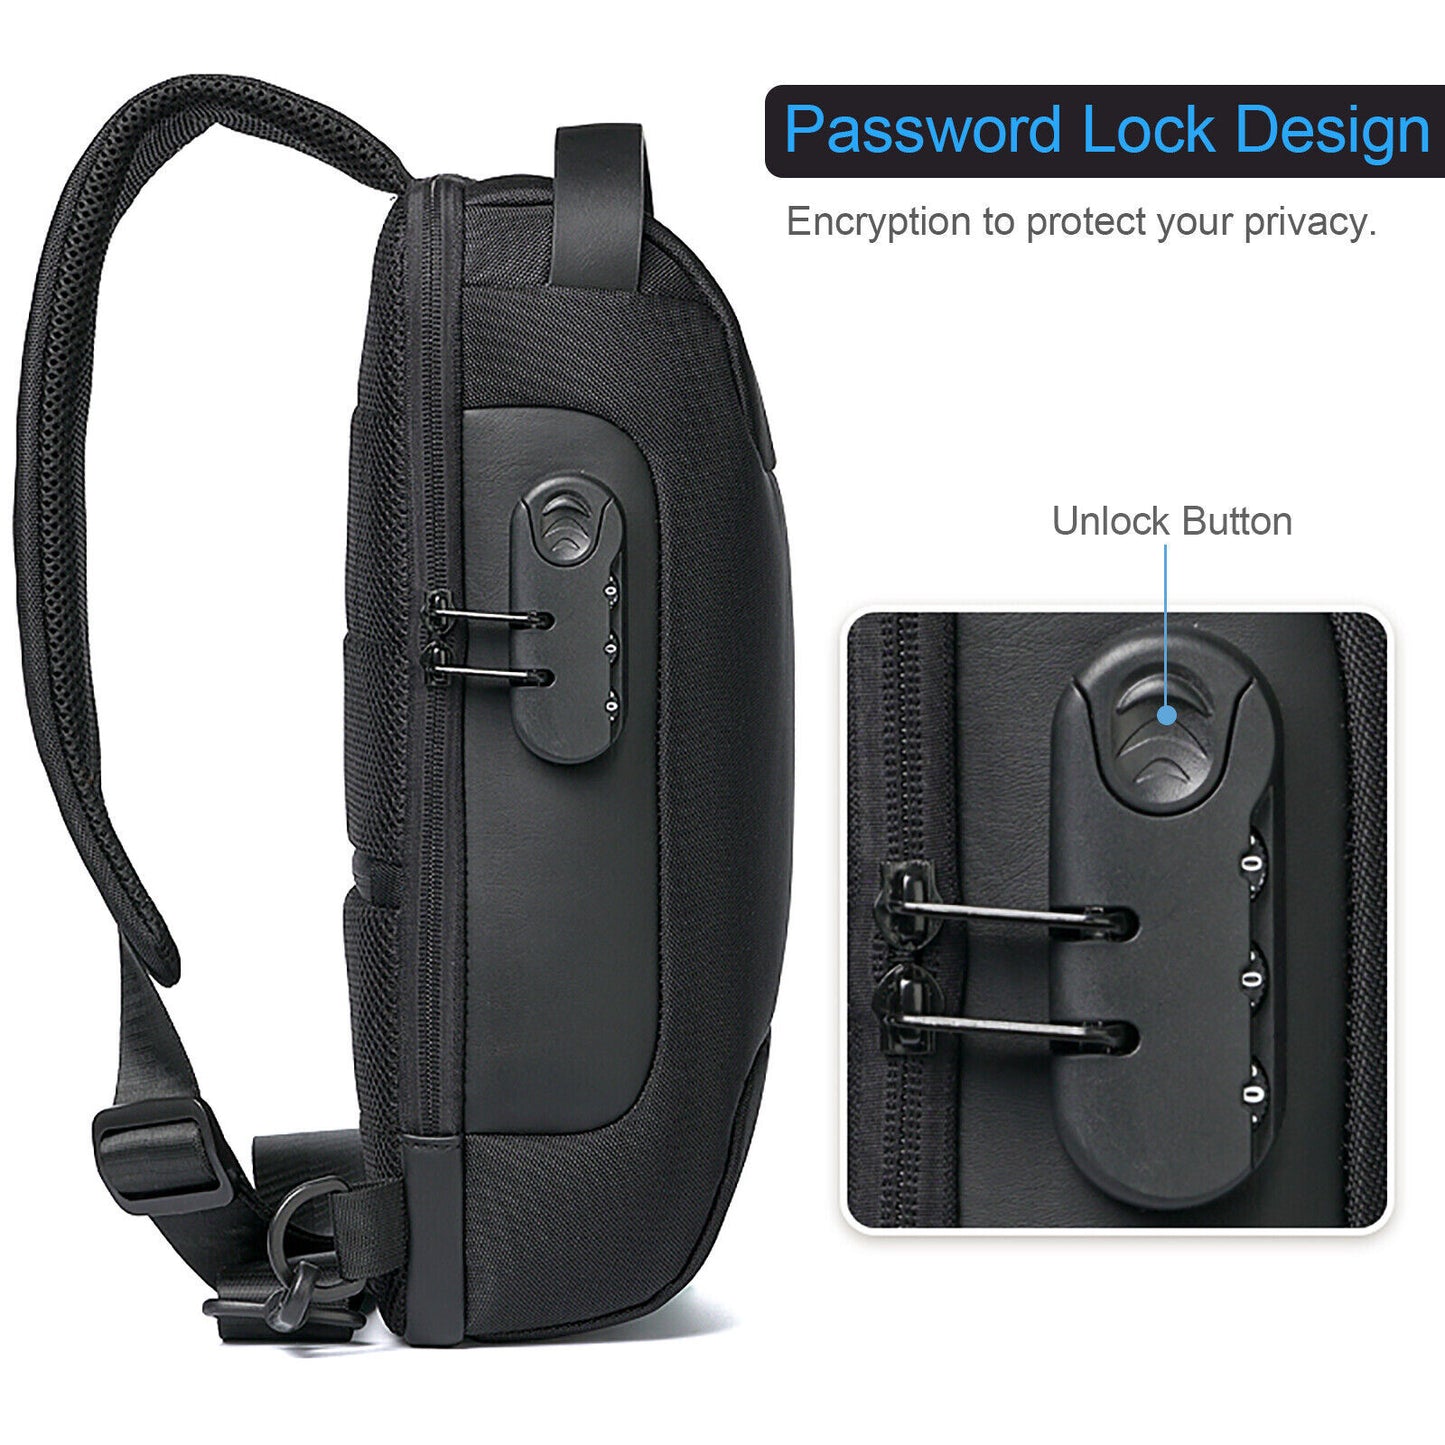 Anti Theft Sling Bag Waterproof Crossbody Backpack w USB Charge Port